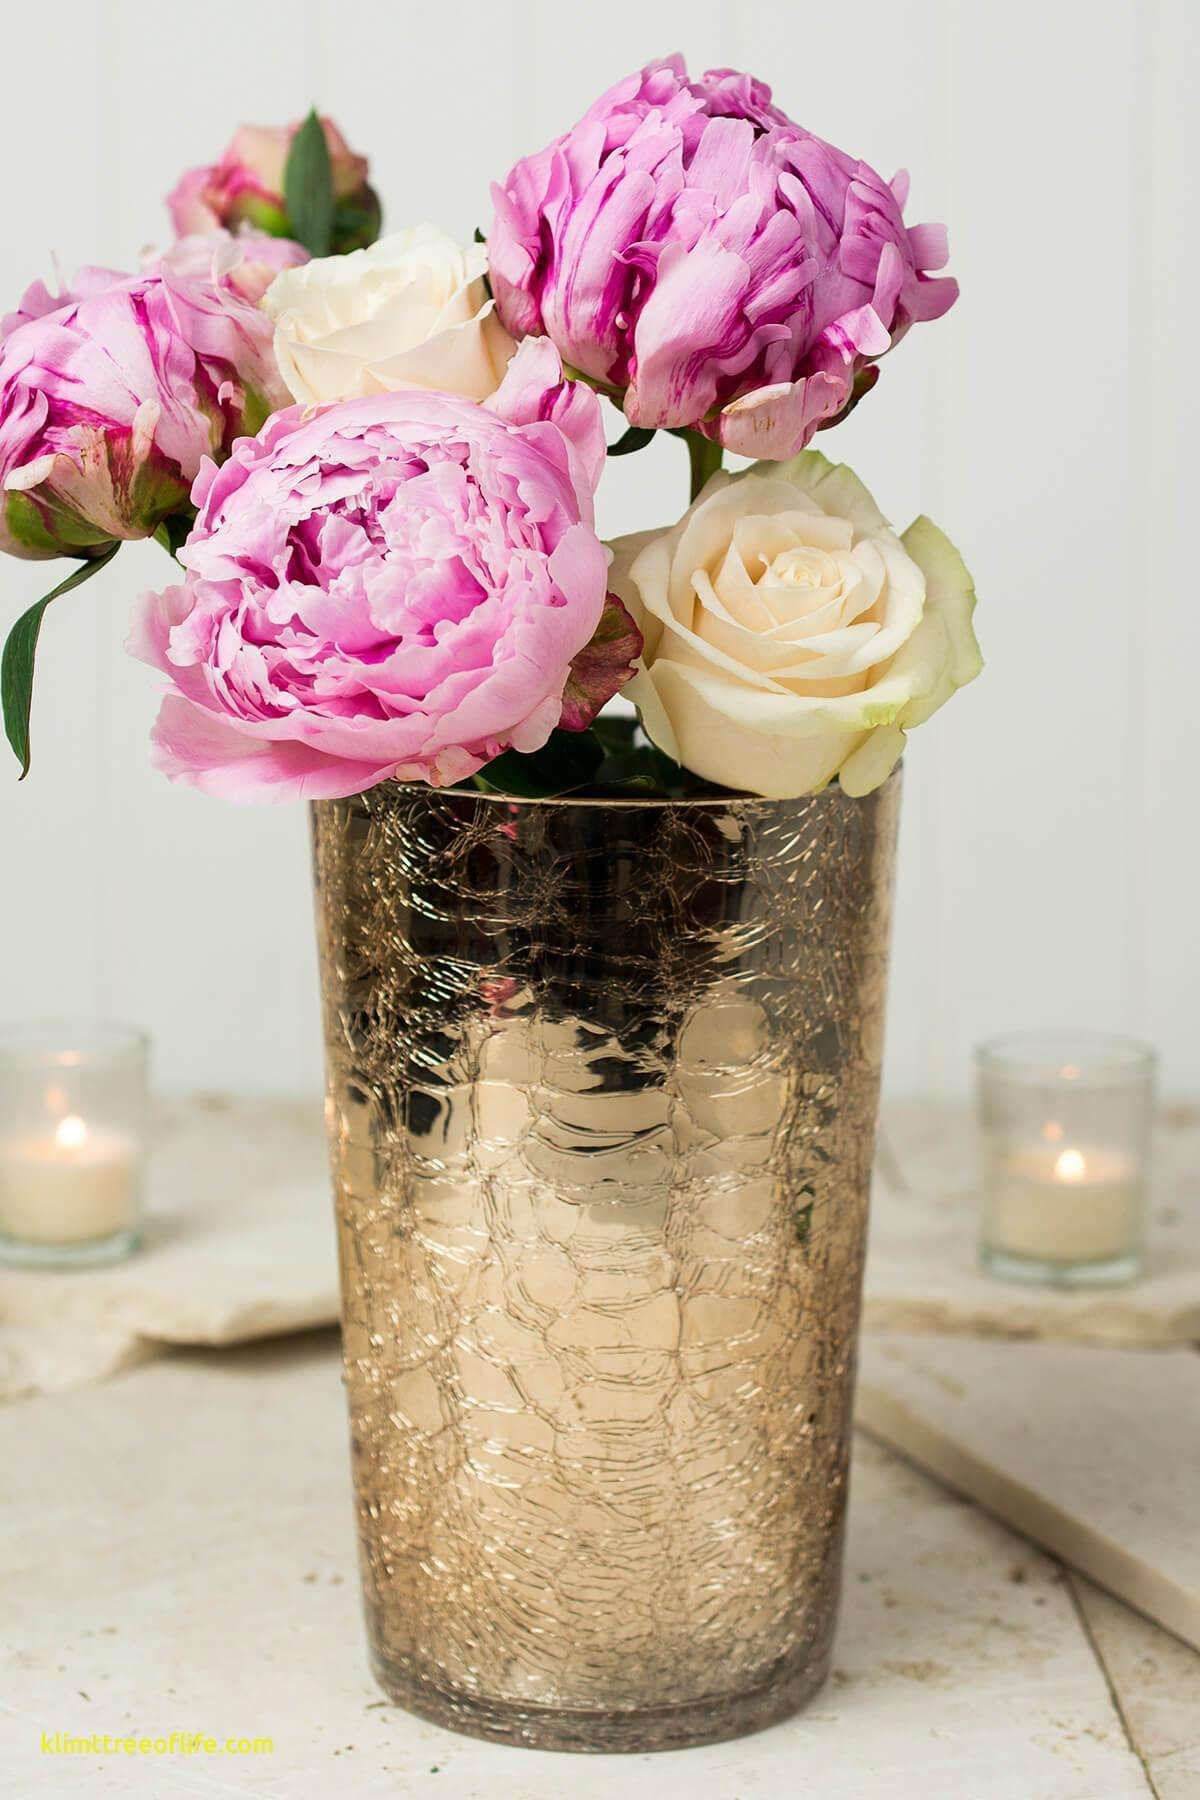 inexpensive vase filler ideas of purple vase fillers best of 41 elegant flower arrangement ideas with purple vase fillers best of 41 elegant flower arrangement ideas image